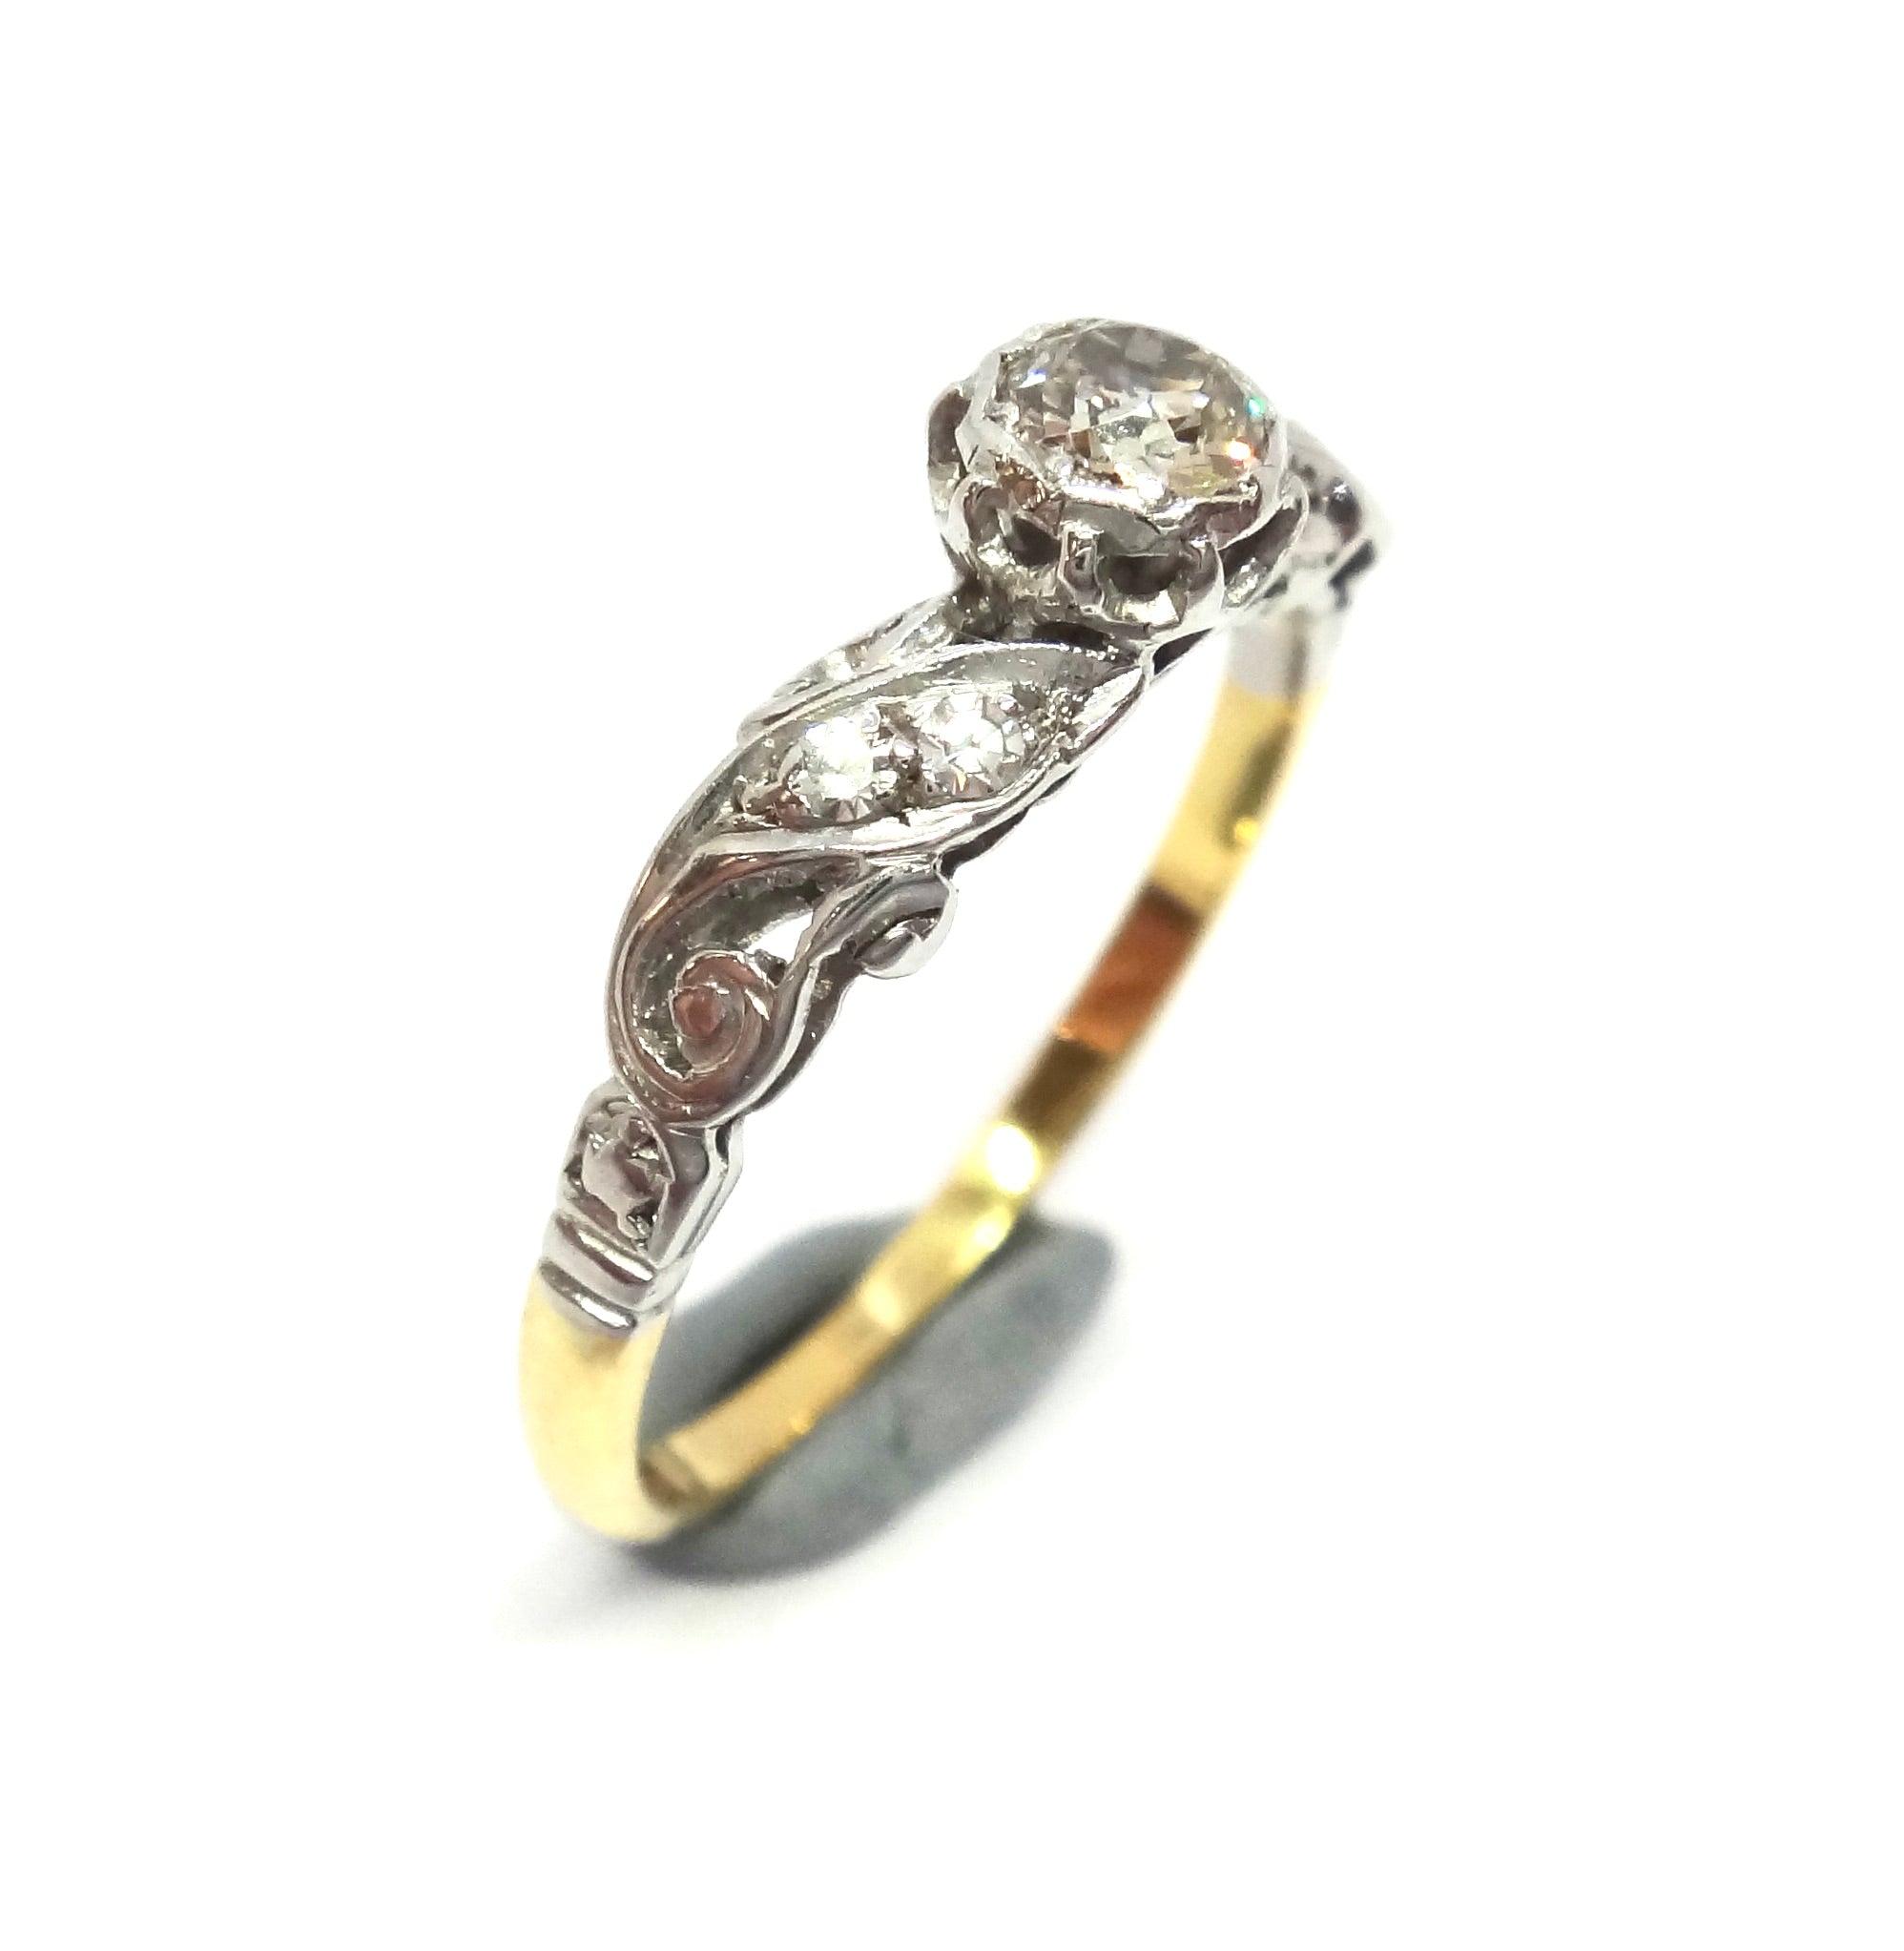 ANTIQUE 18ct Yellow GOLD & Platinum, Old Cut Diamond Ring